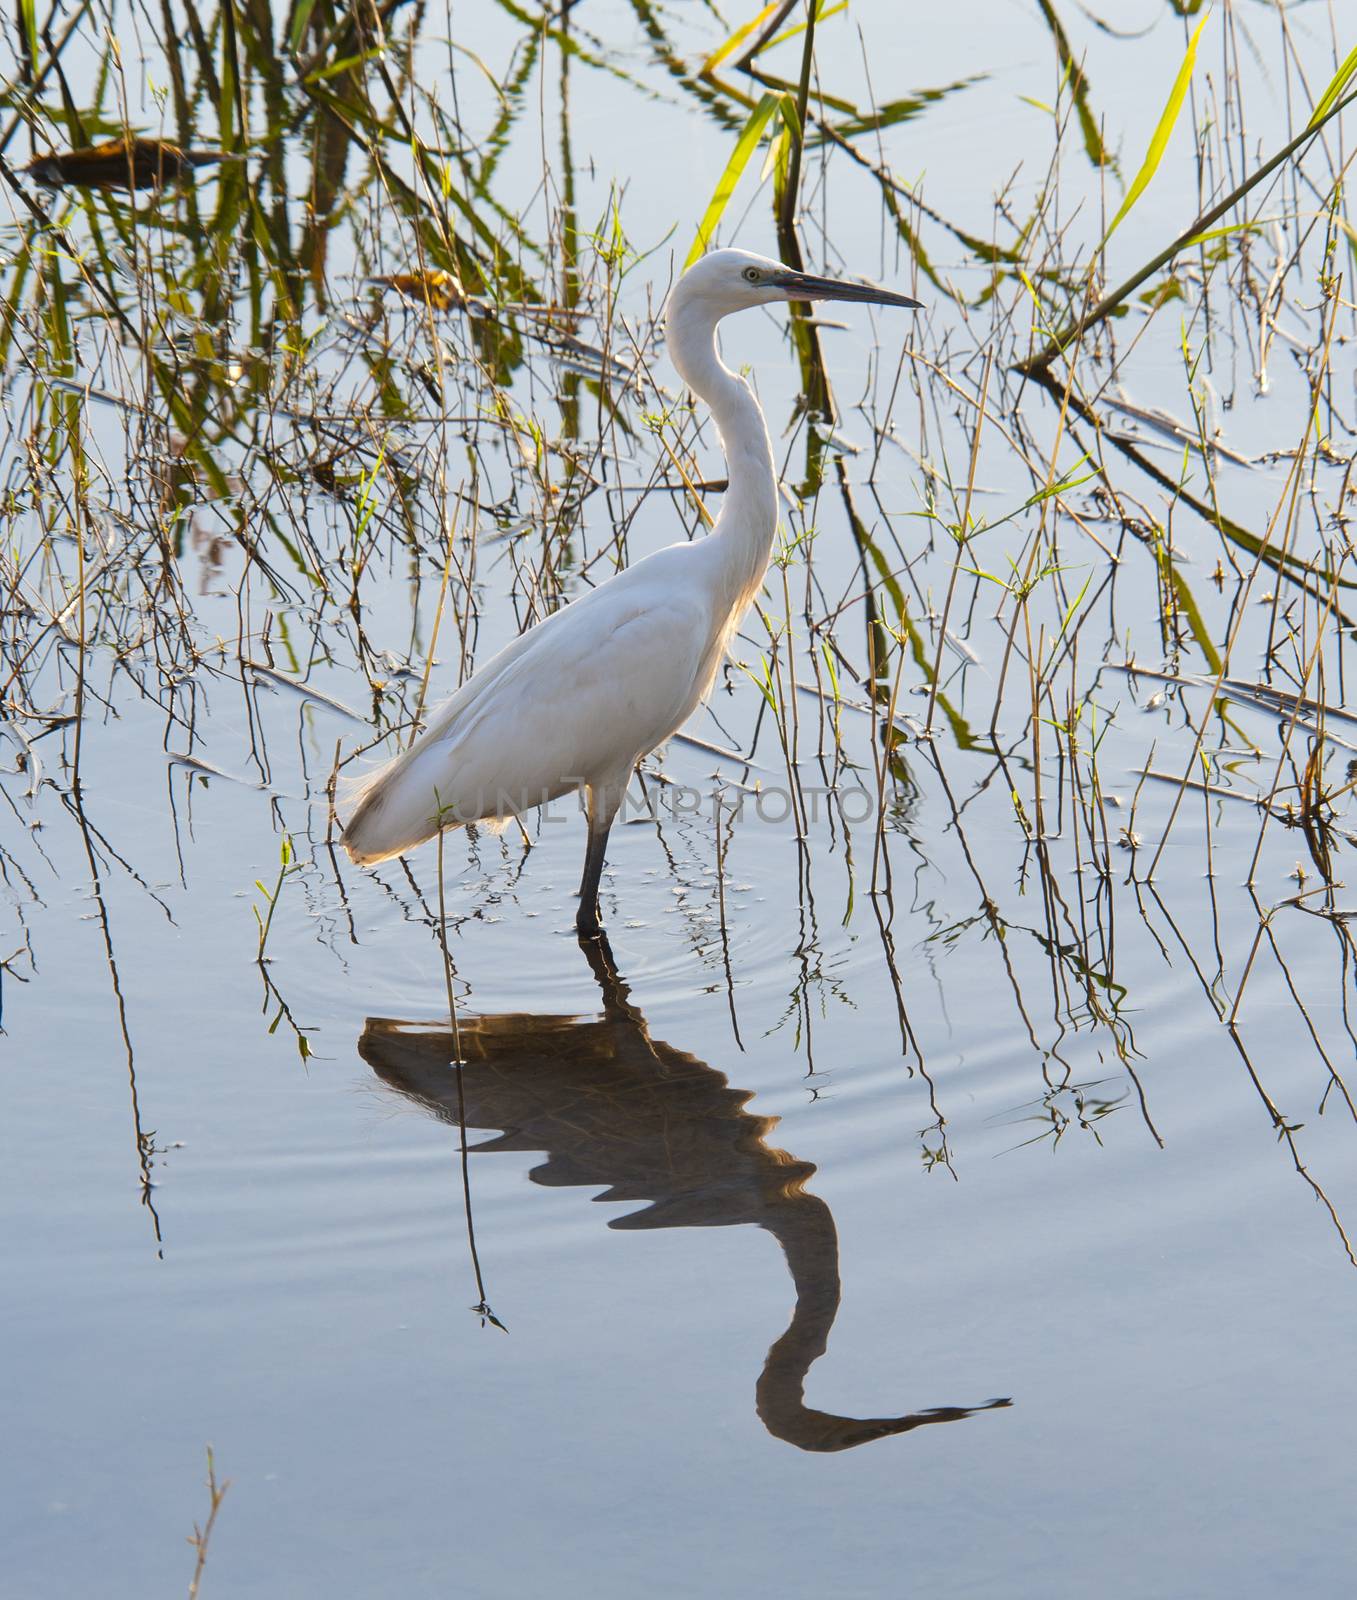 Little egret wading in shallow water by paulvinten